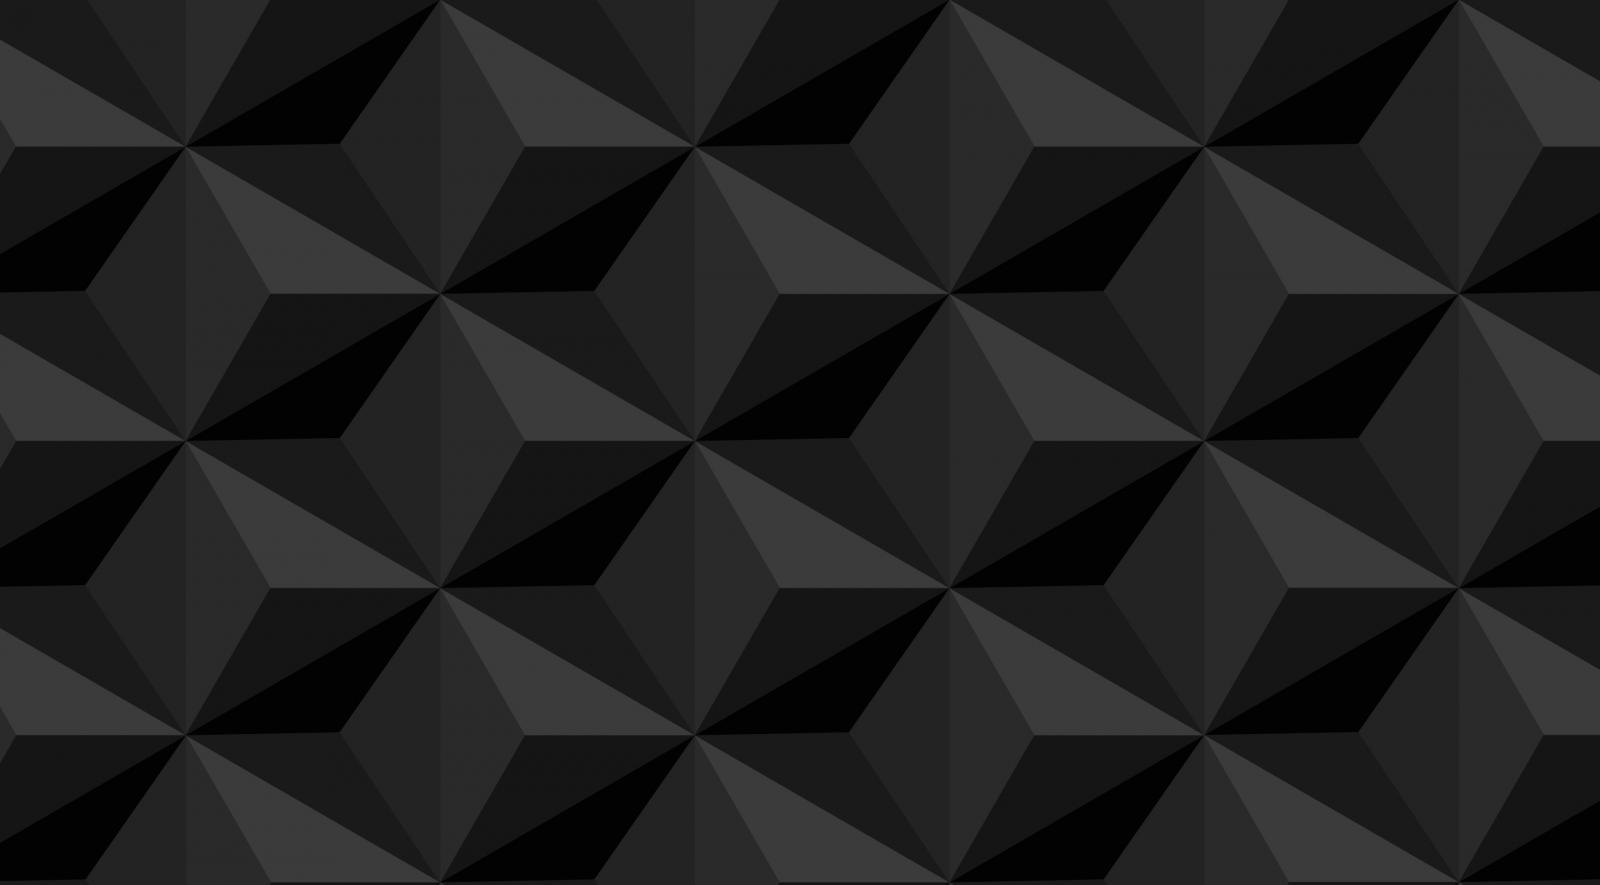 Black box shape pattern